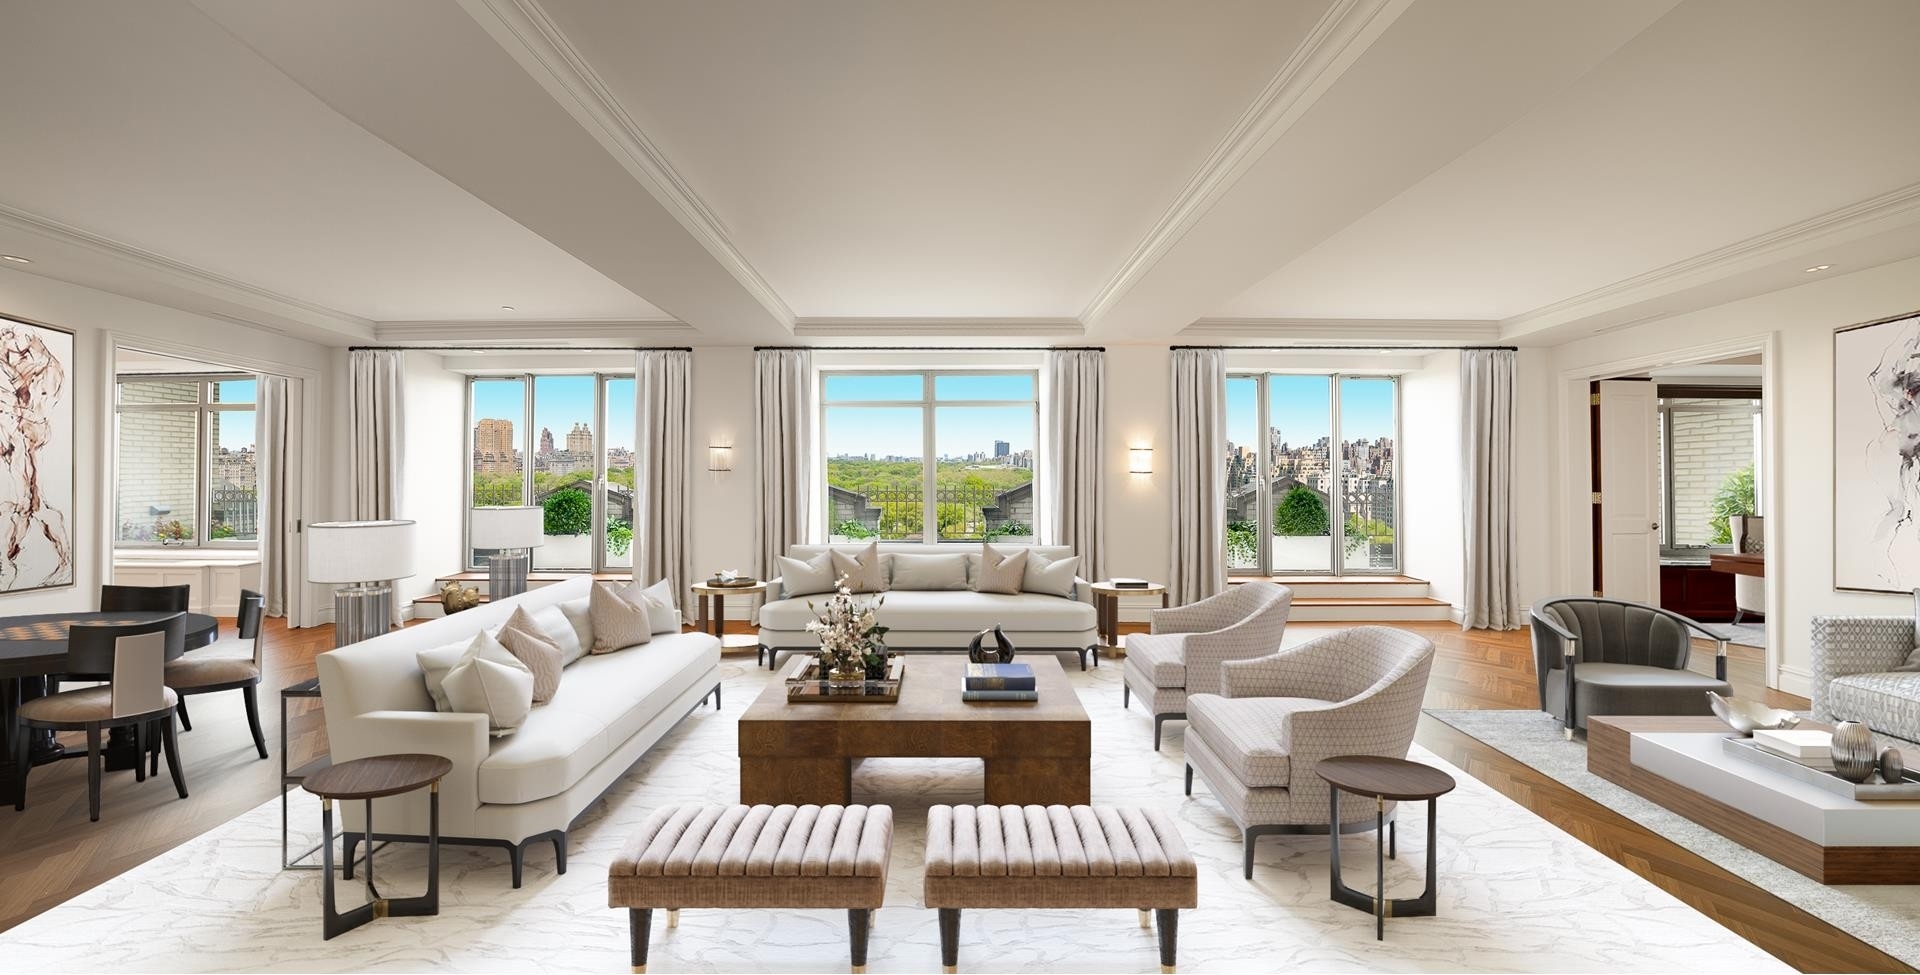 Condominium for Sale at Residences At Ritz-Carlton, 50 CENTRAL PARK S, PH23 Central Park South, New York, NY 10019